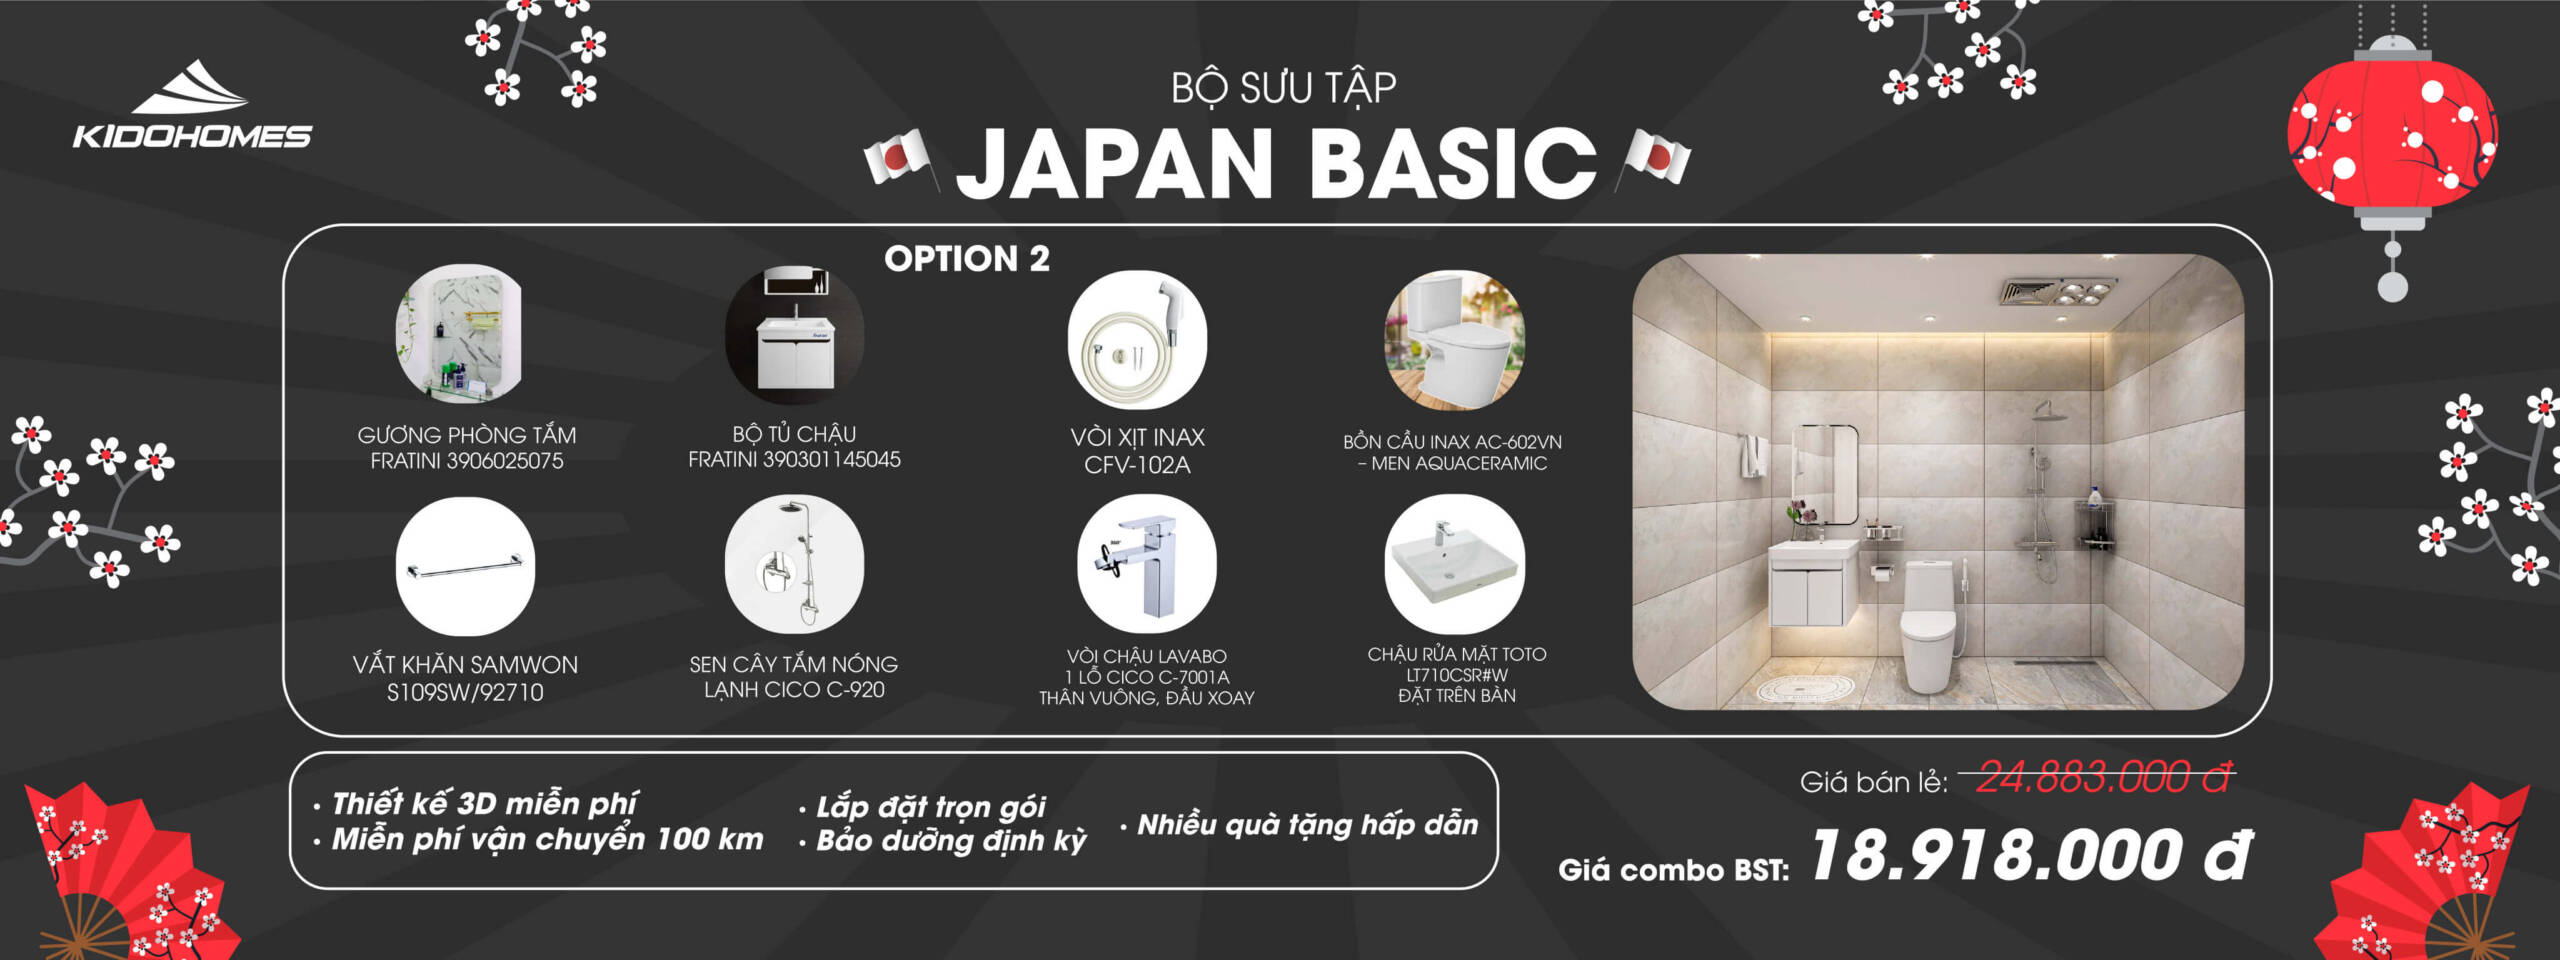 slide japan basic 2 scaled